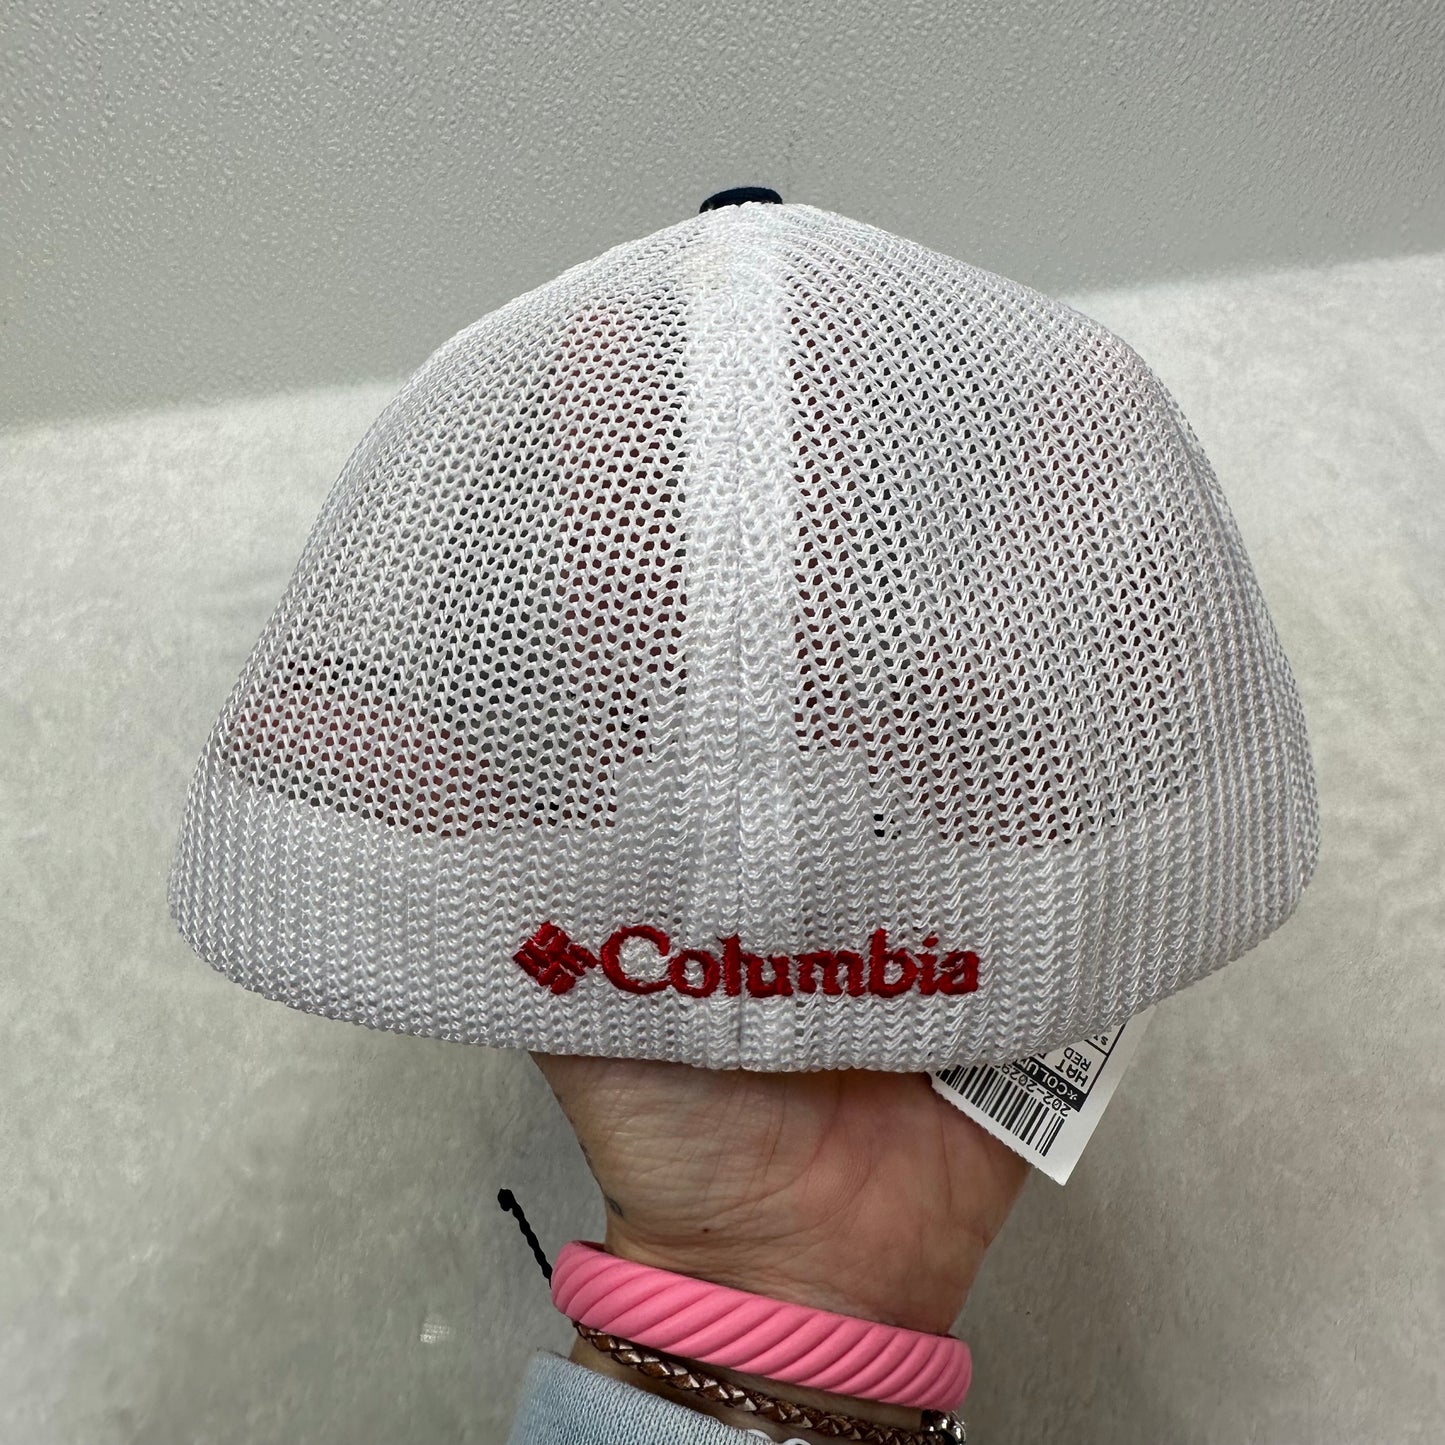 Hat Baseball Cap By Columbia